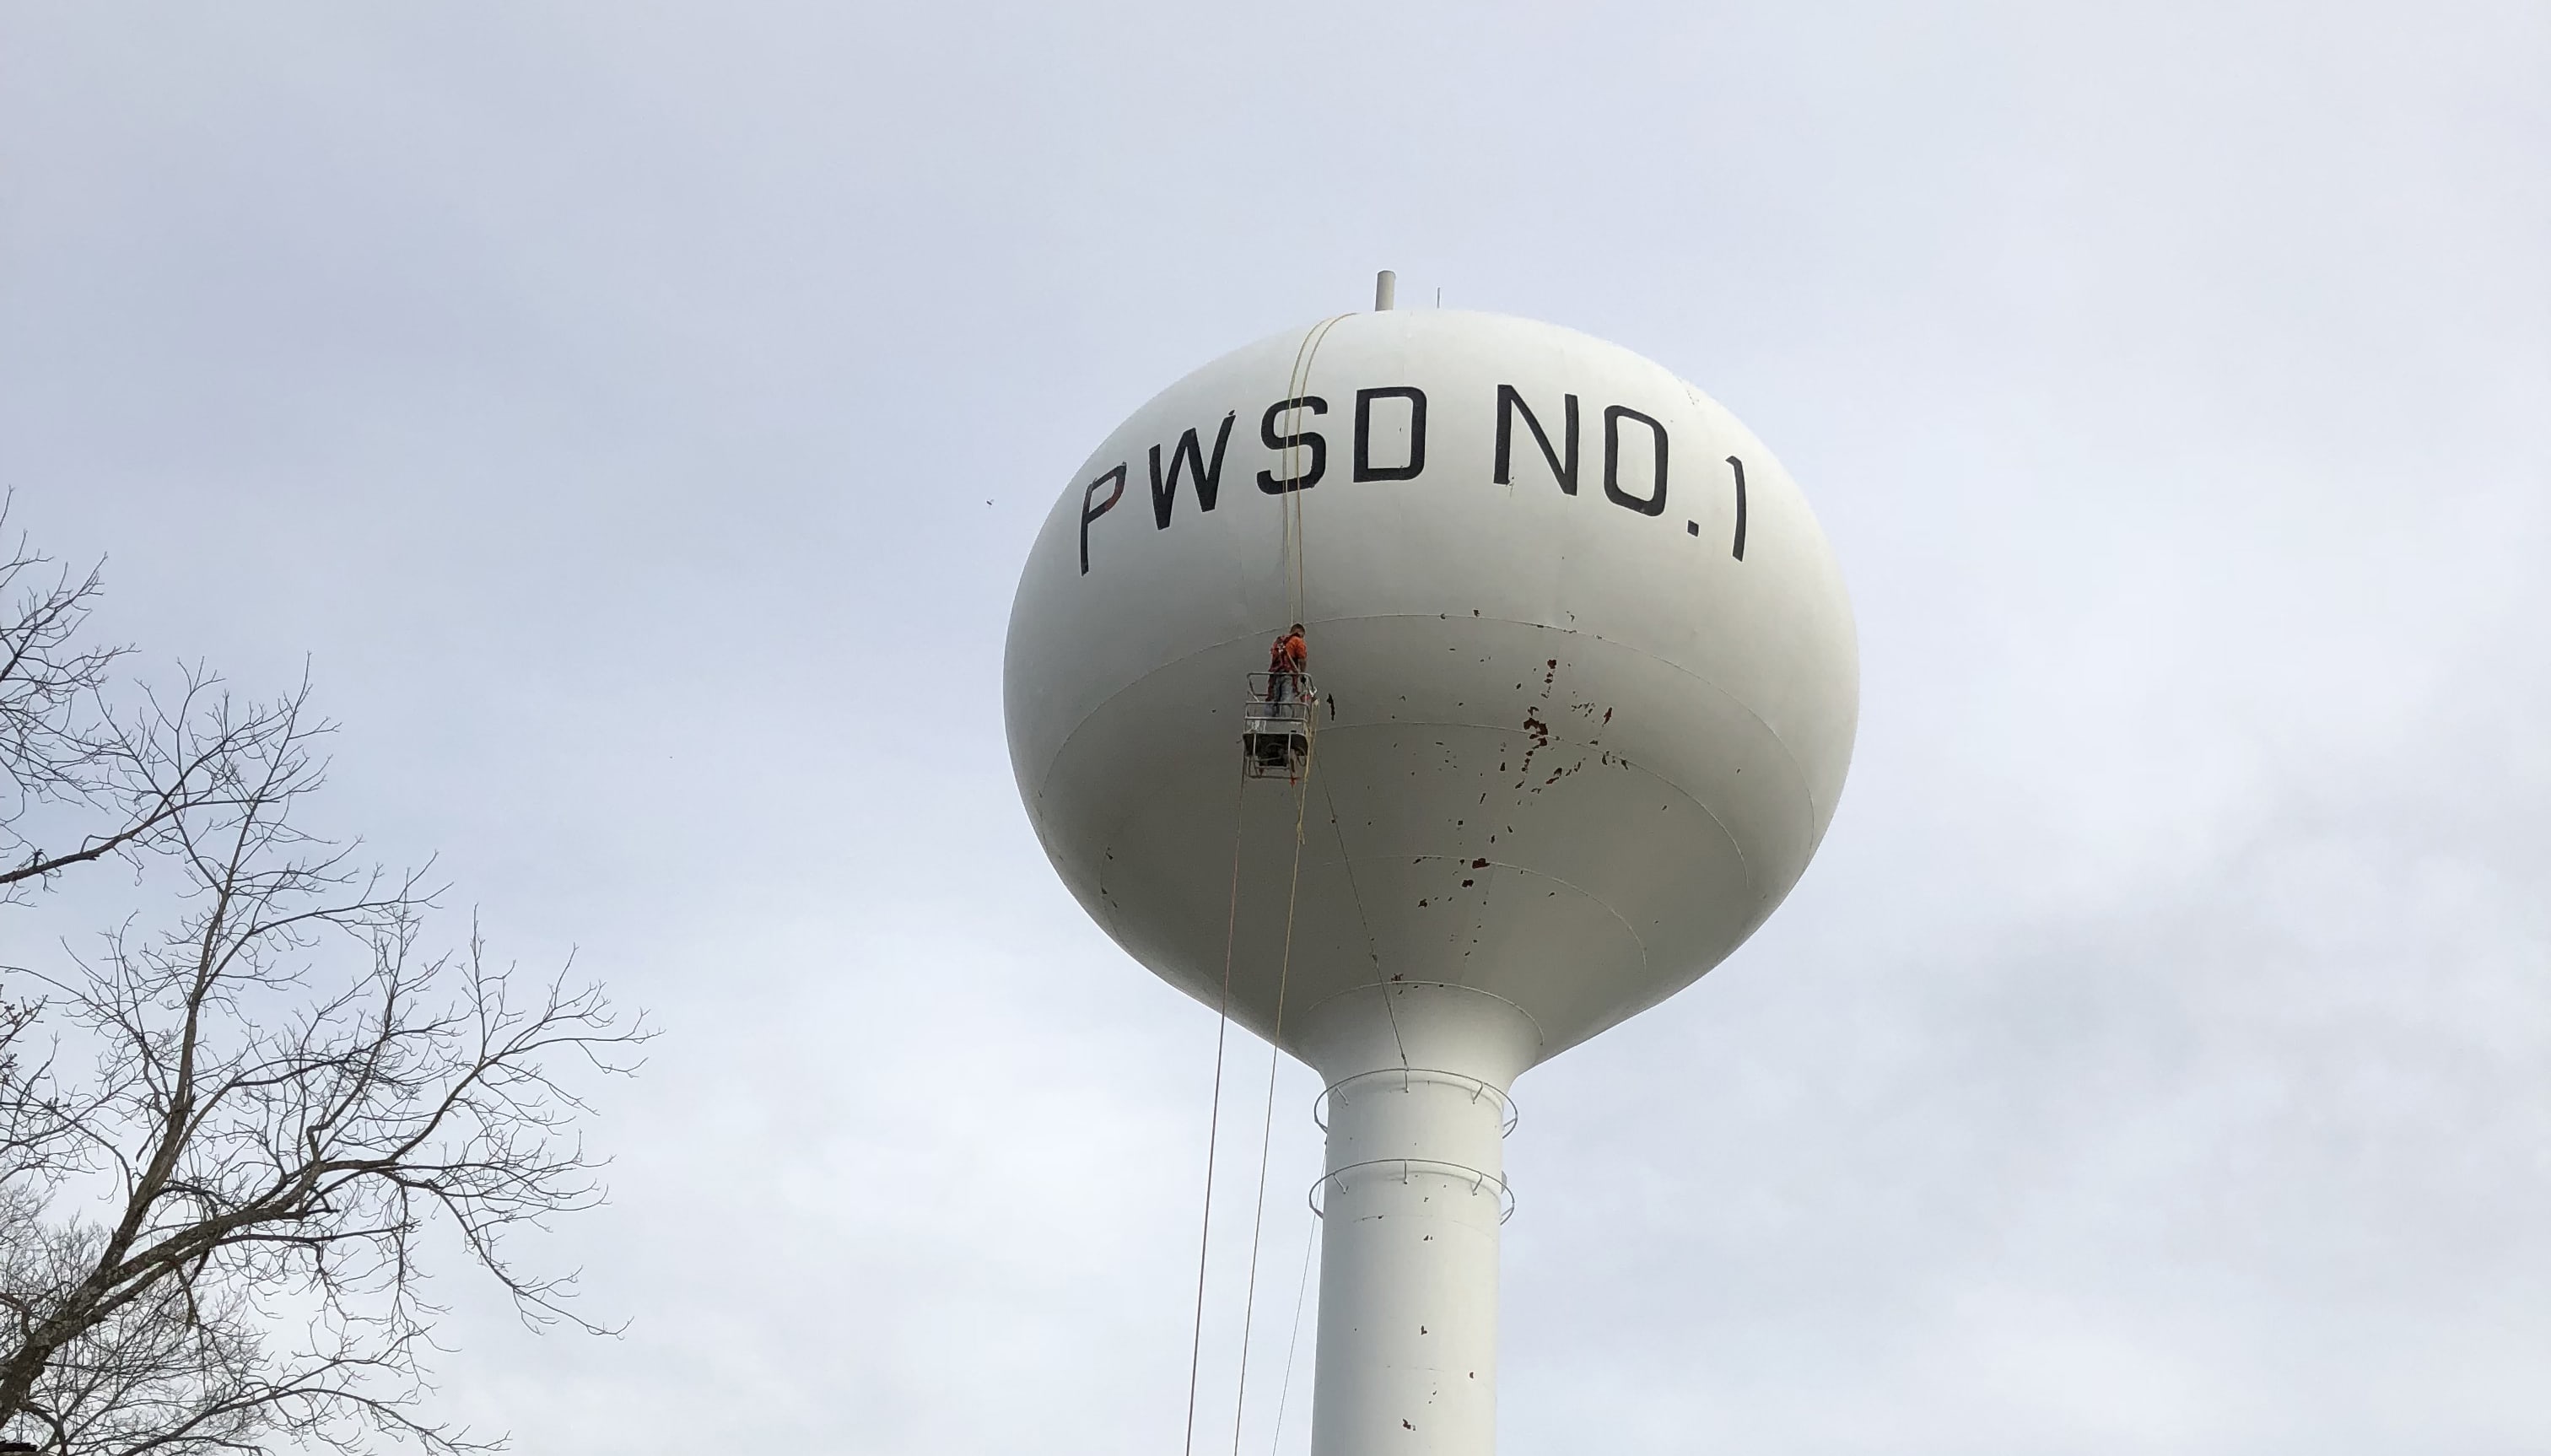 PSWD NO. 1 Water Tank undershot